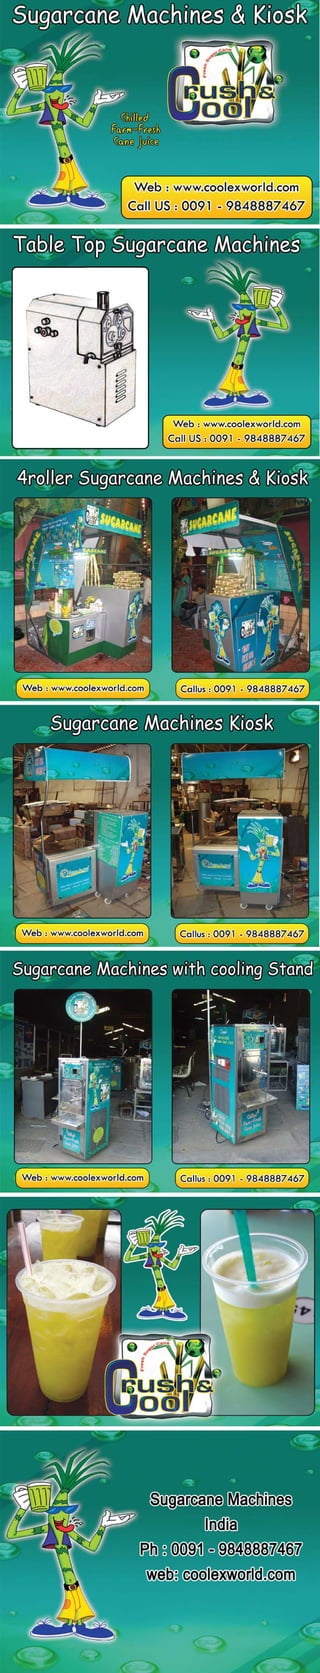 Sugarcane machine exporters